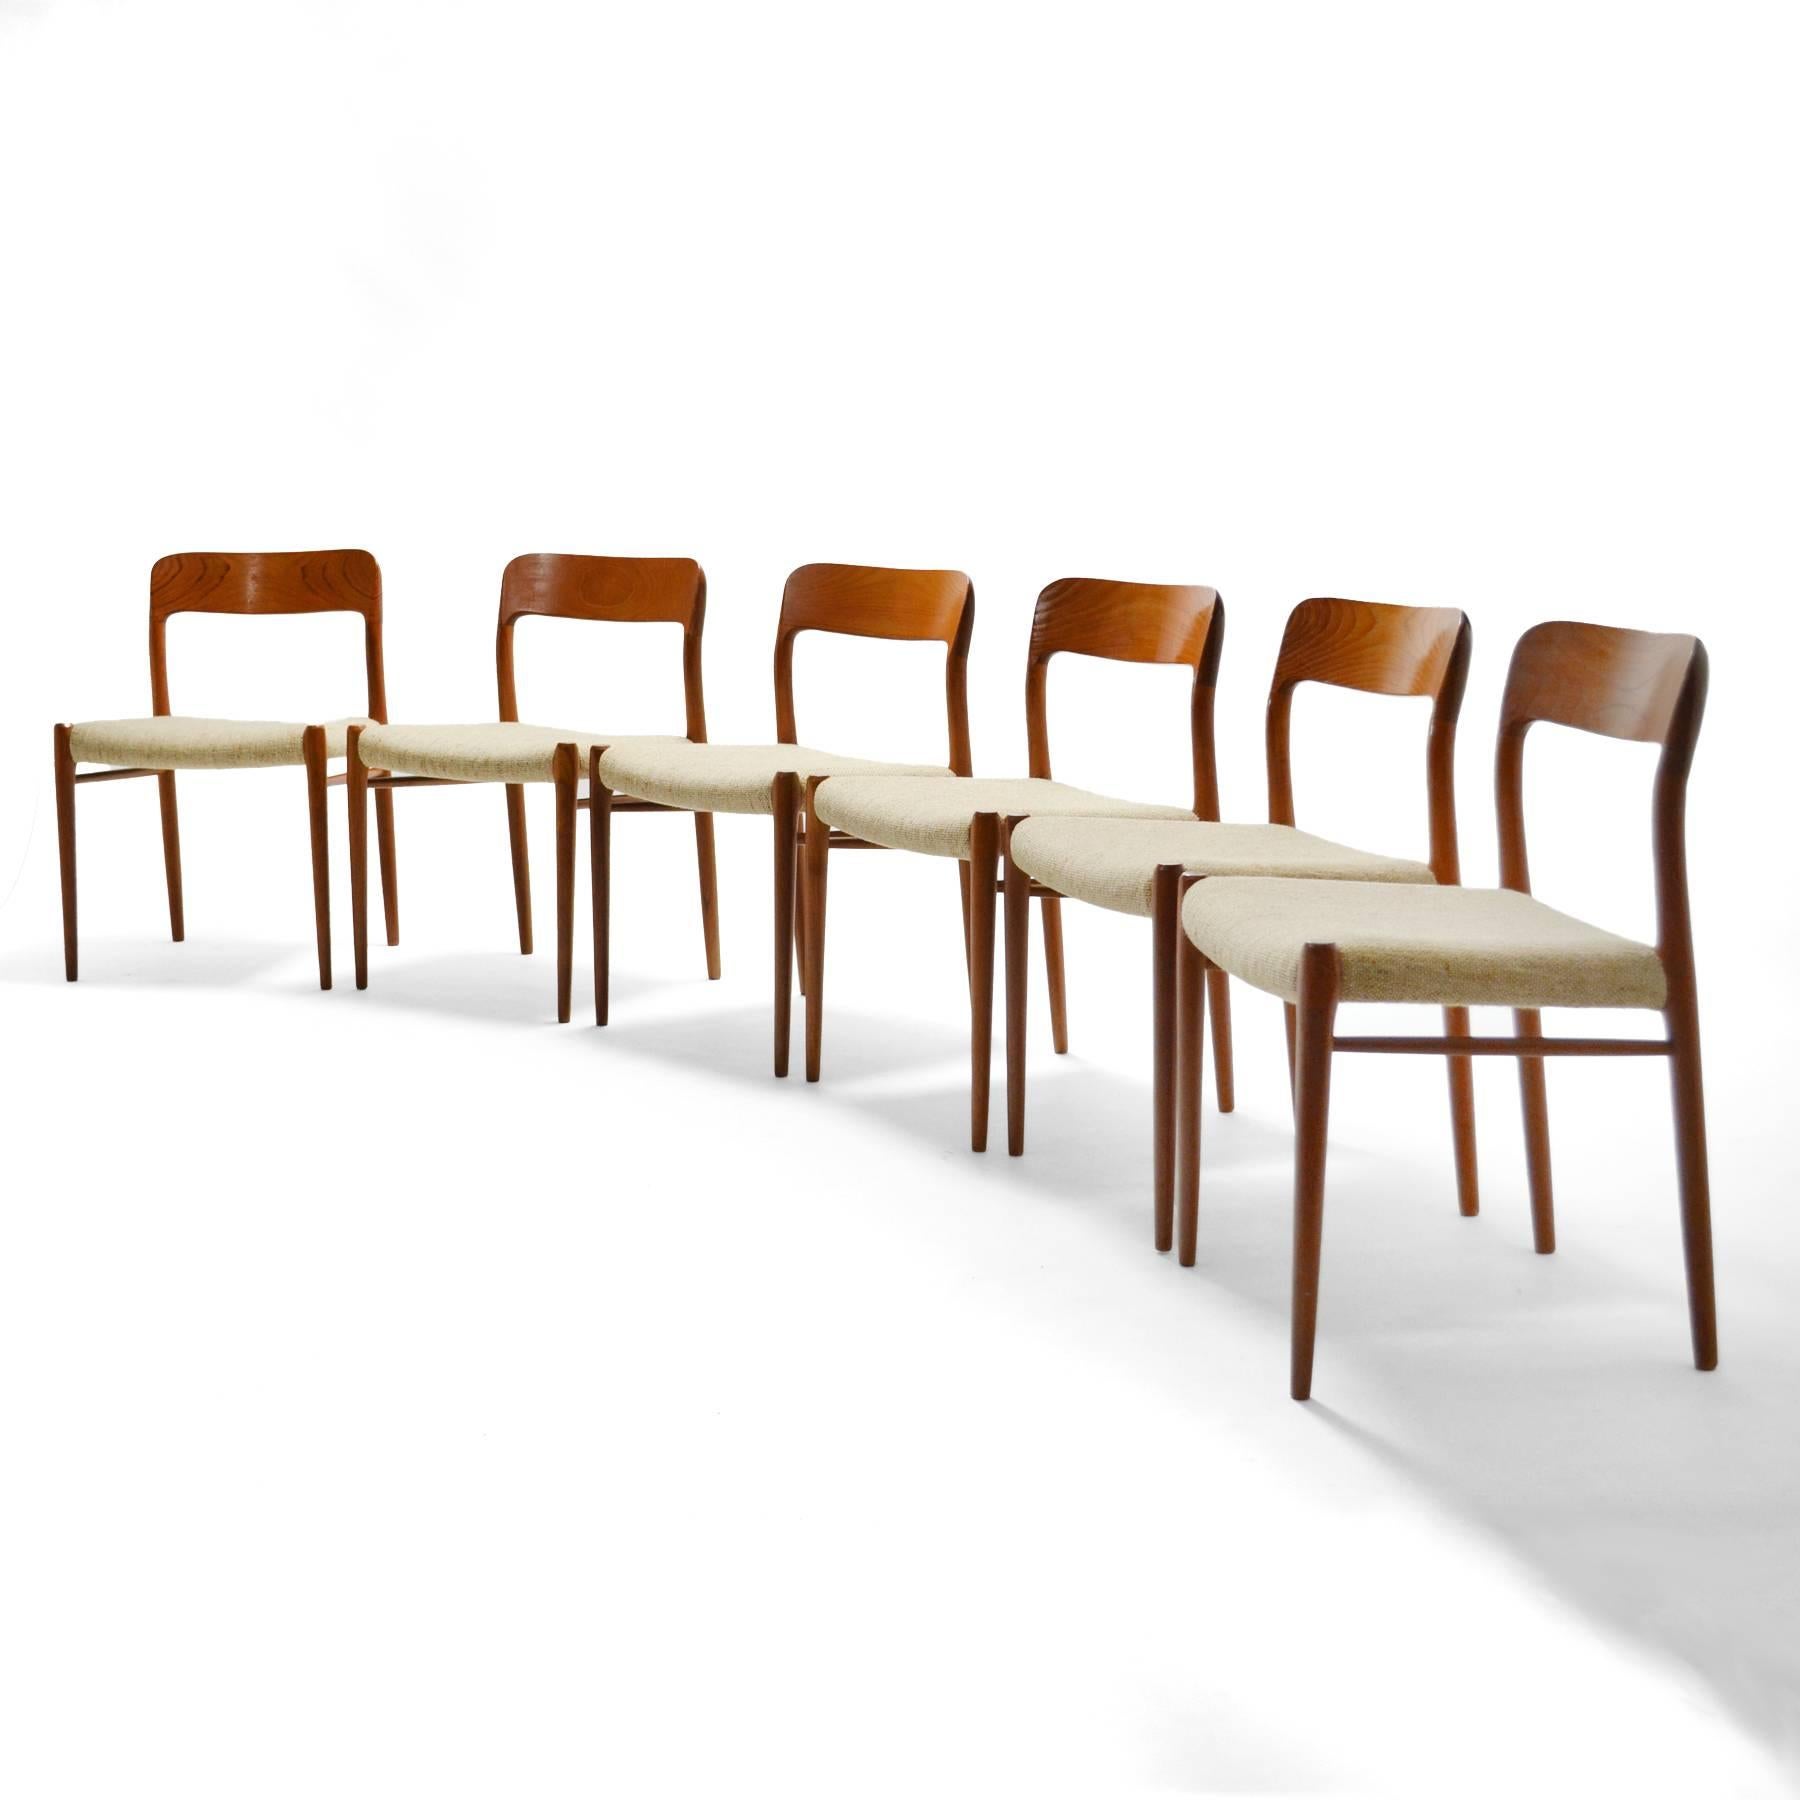 An exceptional set of Niels O. Møller model 75 chairs in rich teak by J.L. Møllers Møbelfabrik.